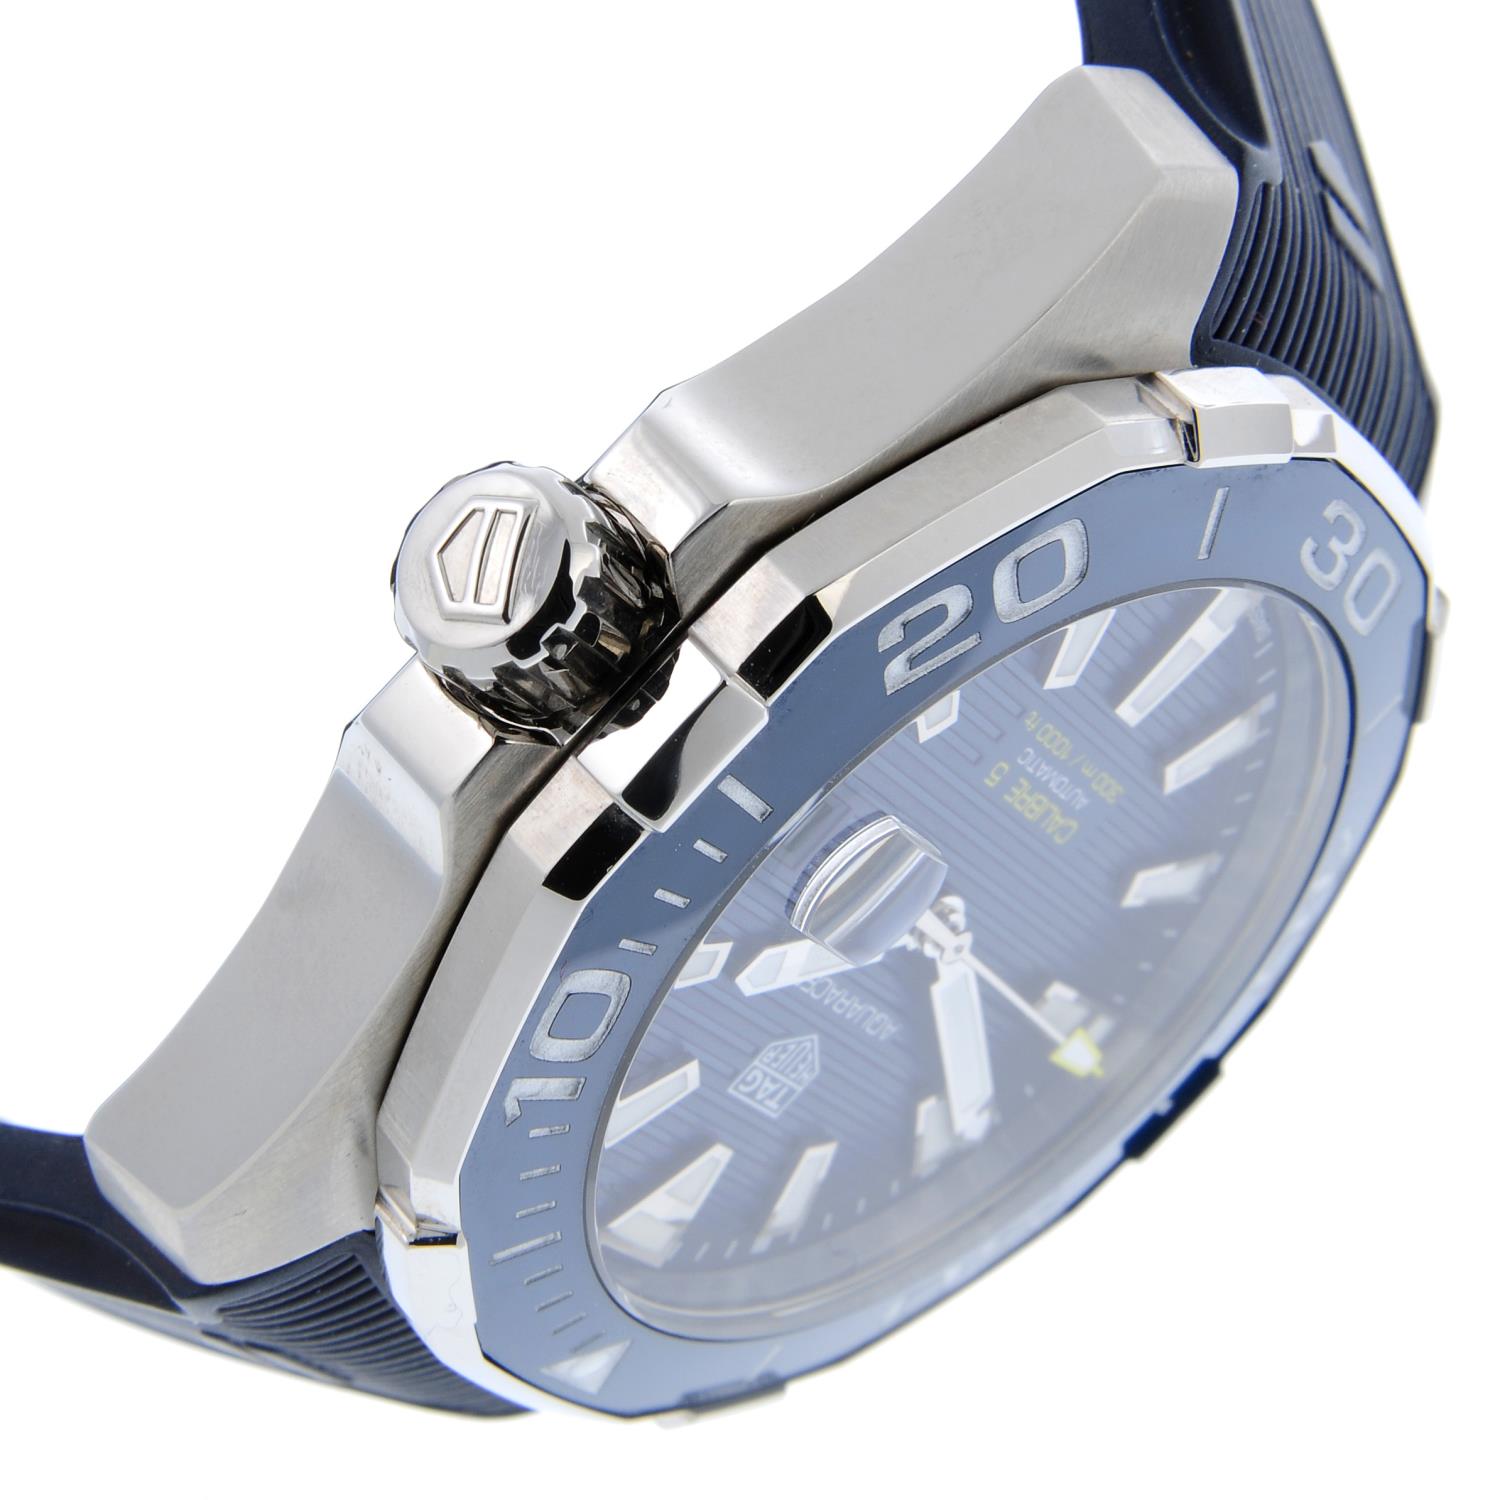 TAG HEUER - a gentleman's Aquaracer Calibre 5 wrist watch. - Image 3 of 4